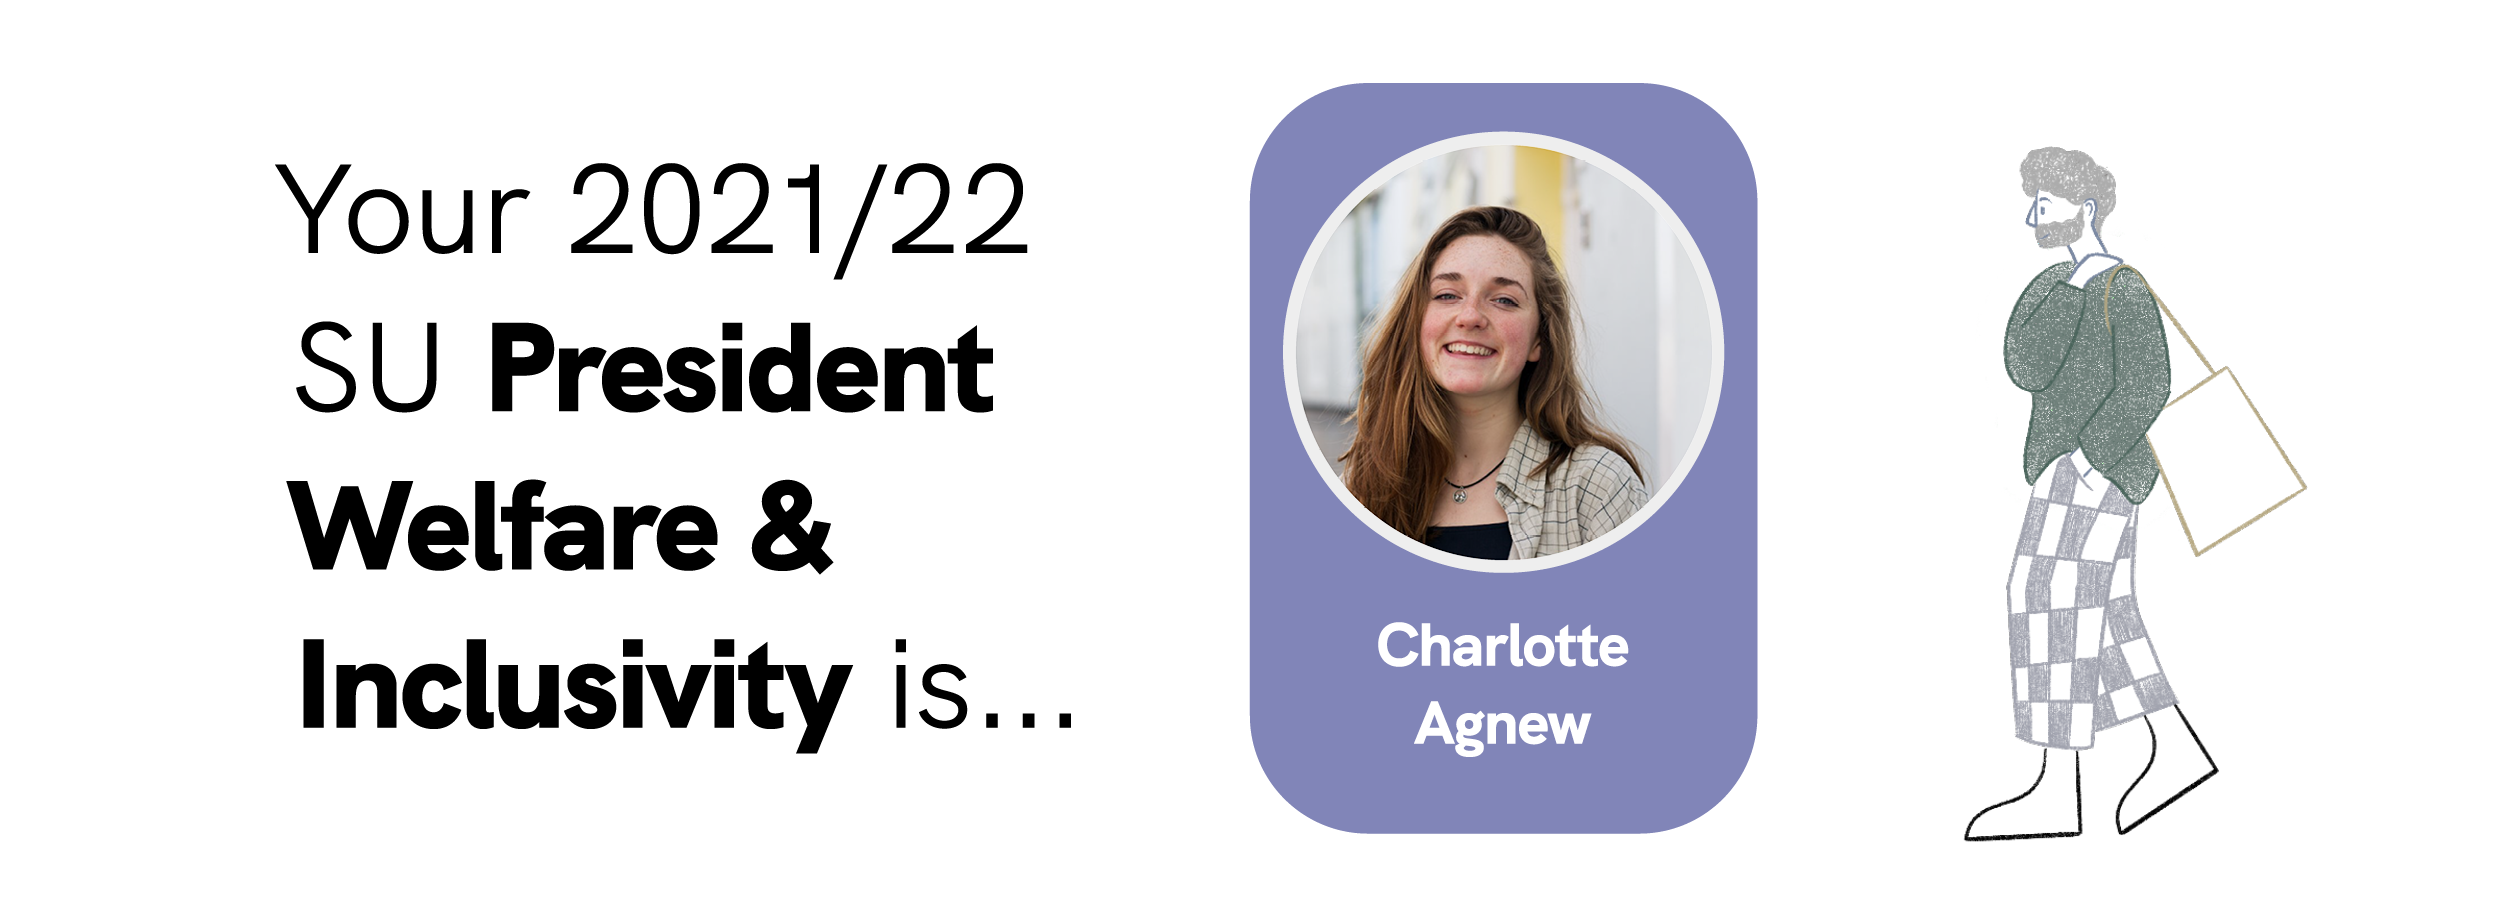 Your 2021/22 SU President Welfare & Inclusivity is... Charlotte Agnew!